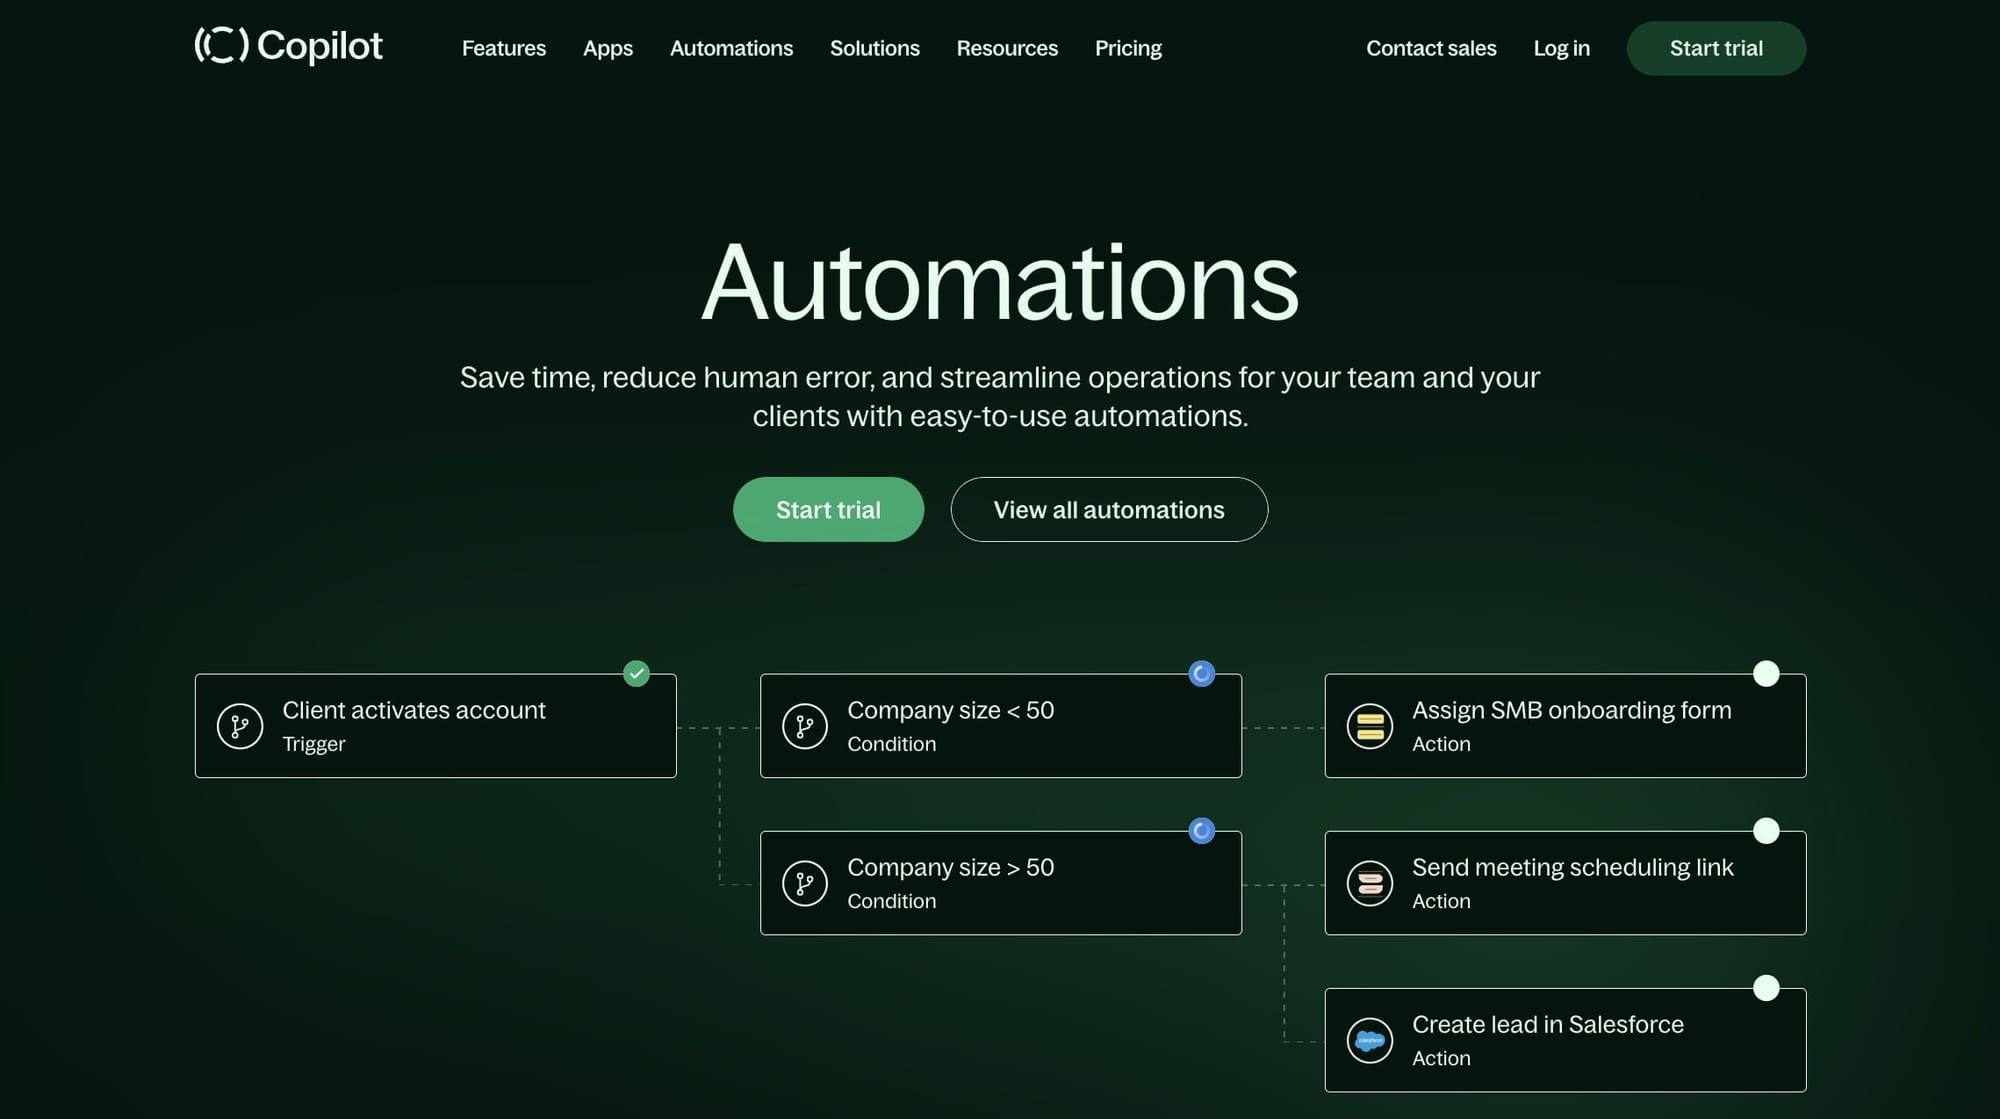 Copilot Automations feature for service businesses